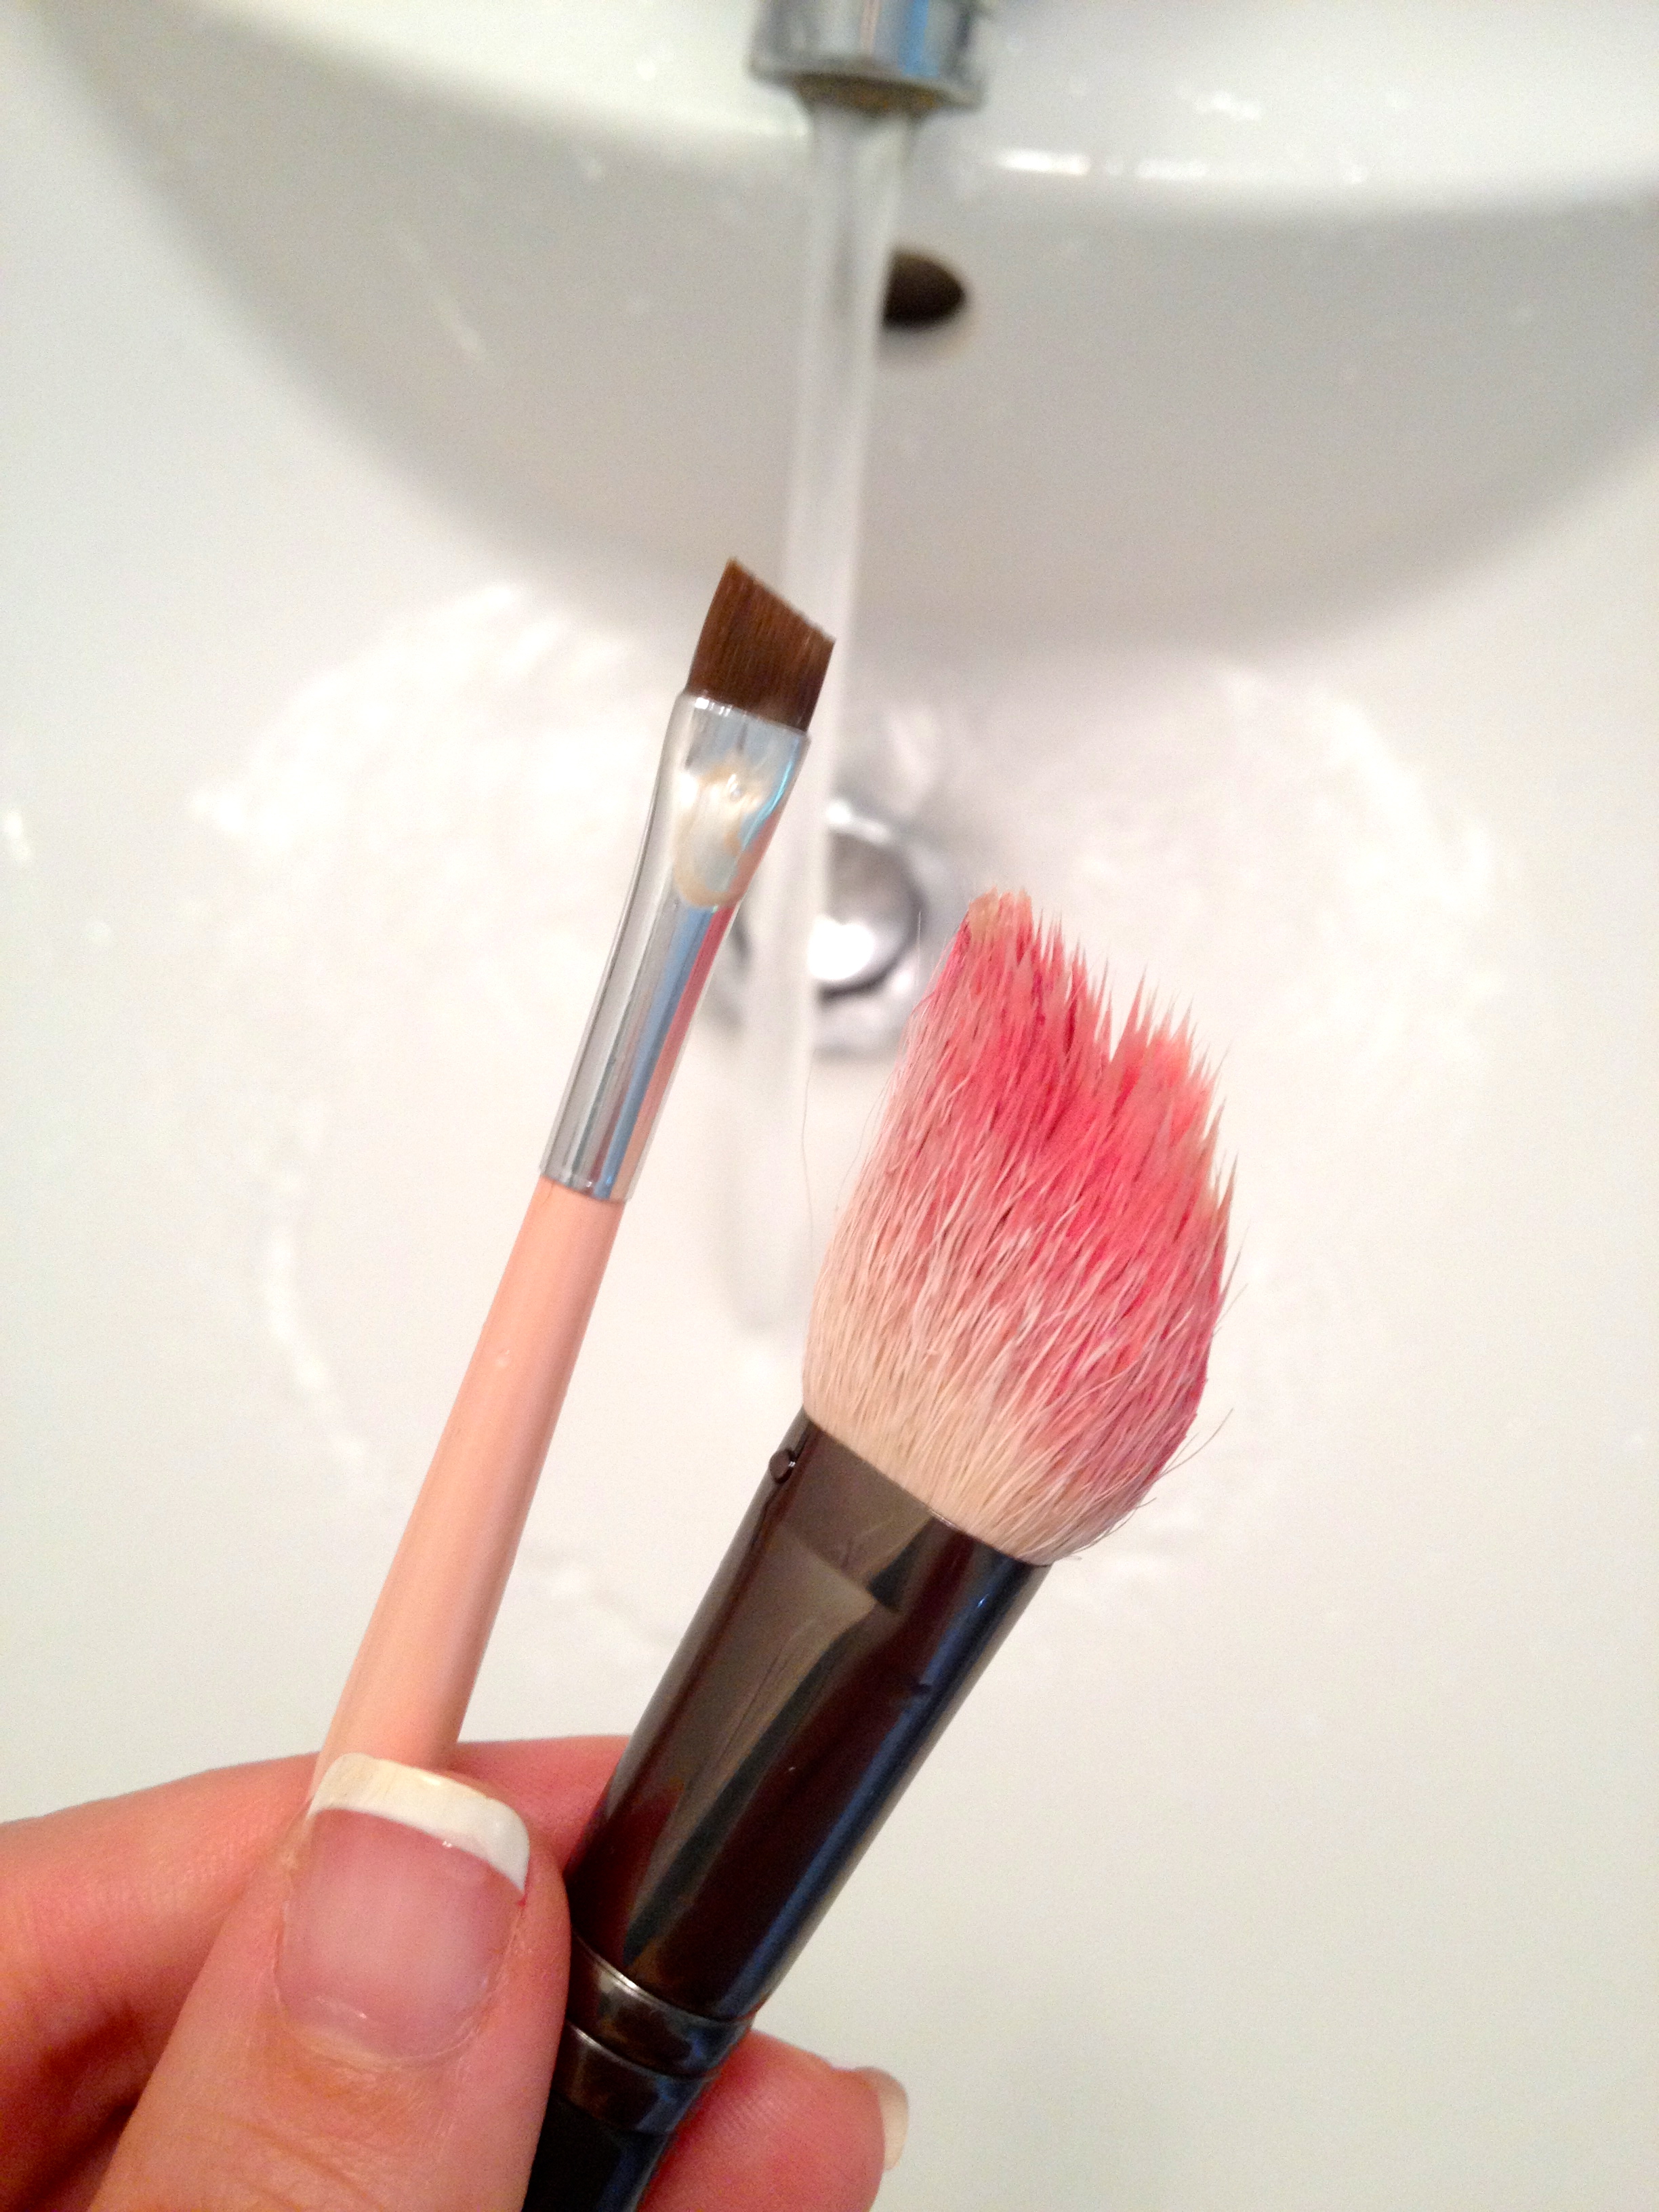 Dirty Make-up Brushes